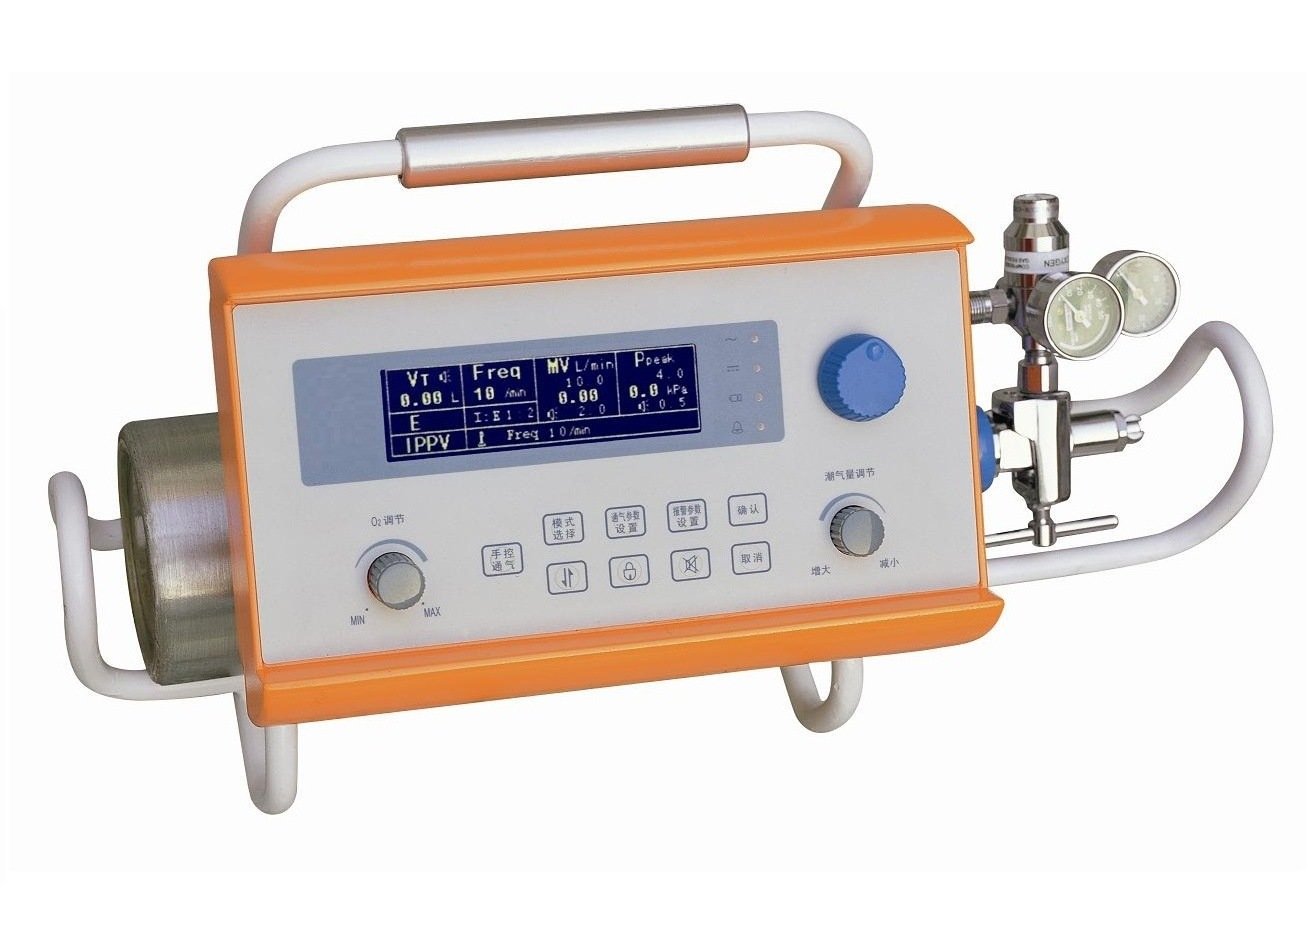 Hv 10 Portable Ventilator Machine Oxygen Breathing Apparatus From China